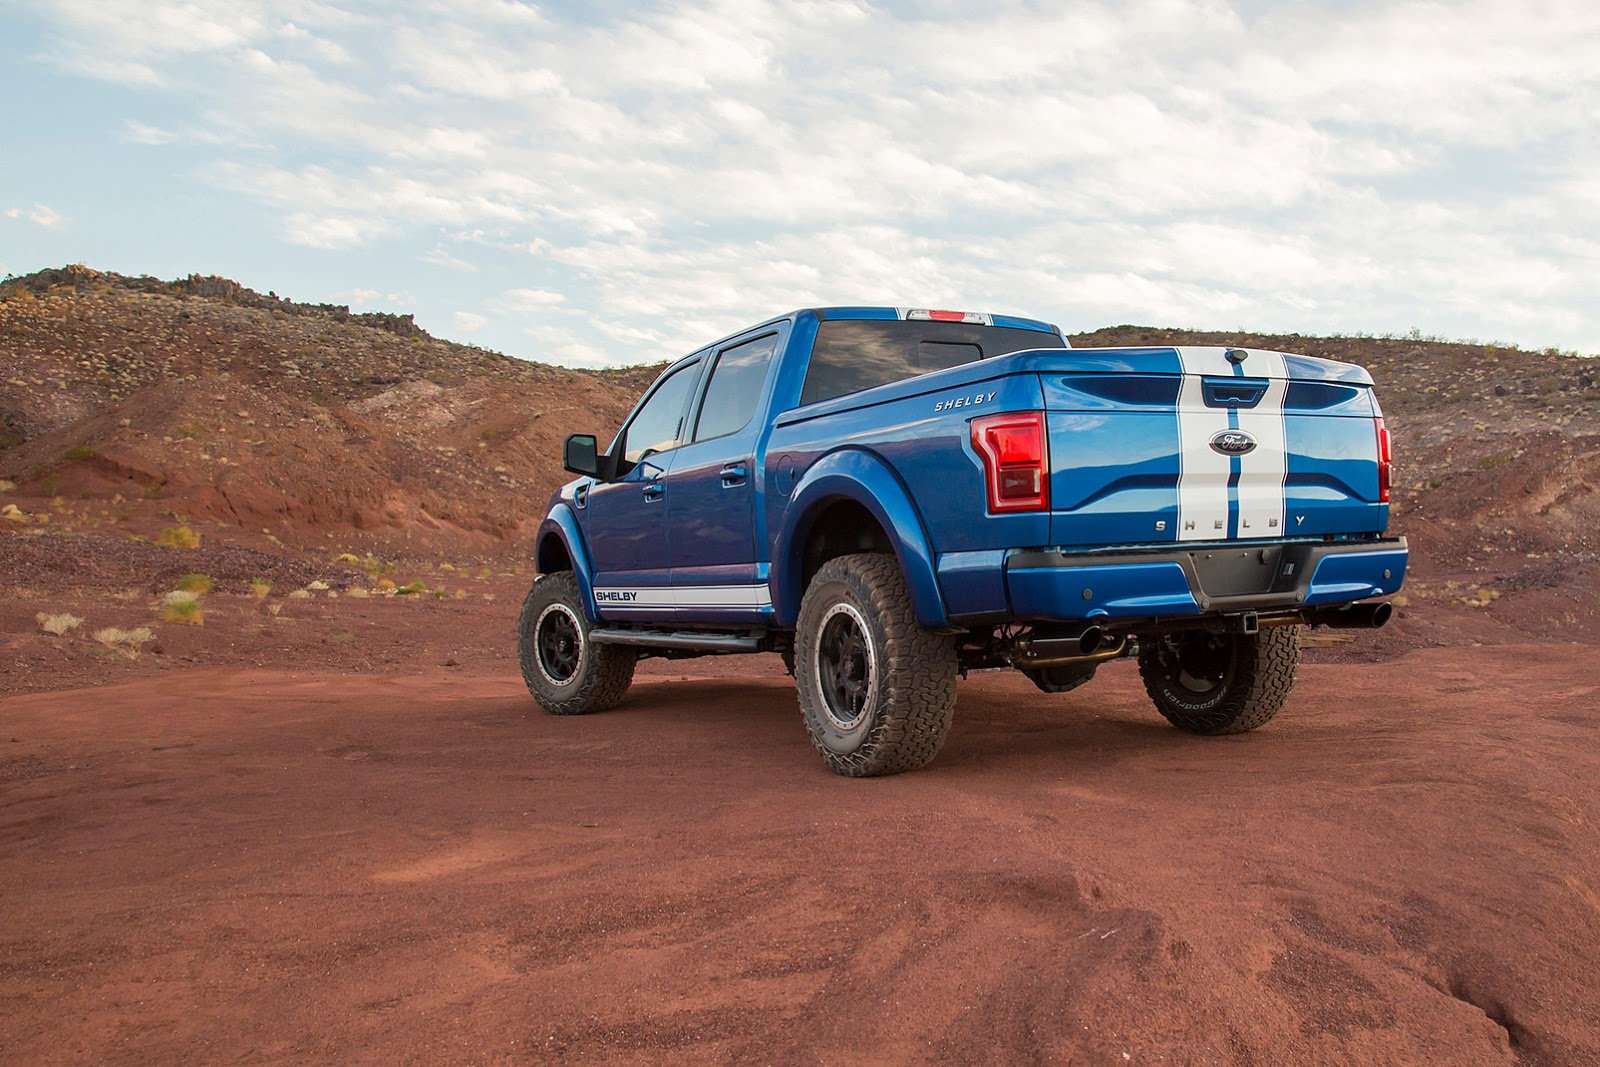 shelby, The, Blue, Thunder, Sema, 2015, F 150, Truck, Ford, Pickup Wallpaper